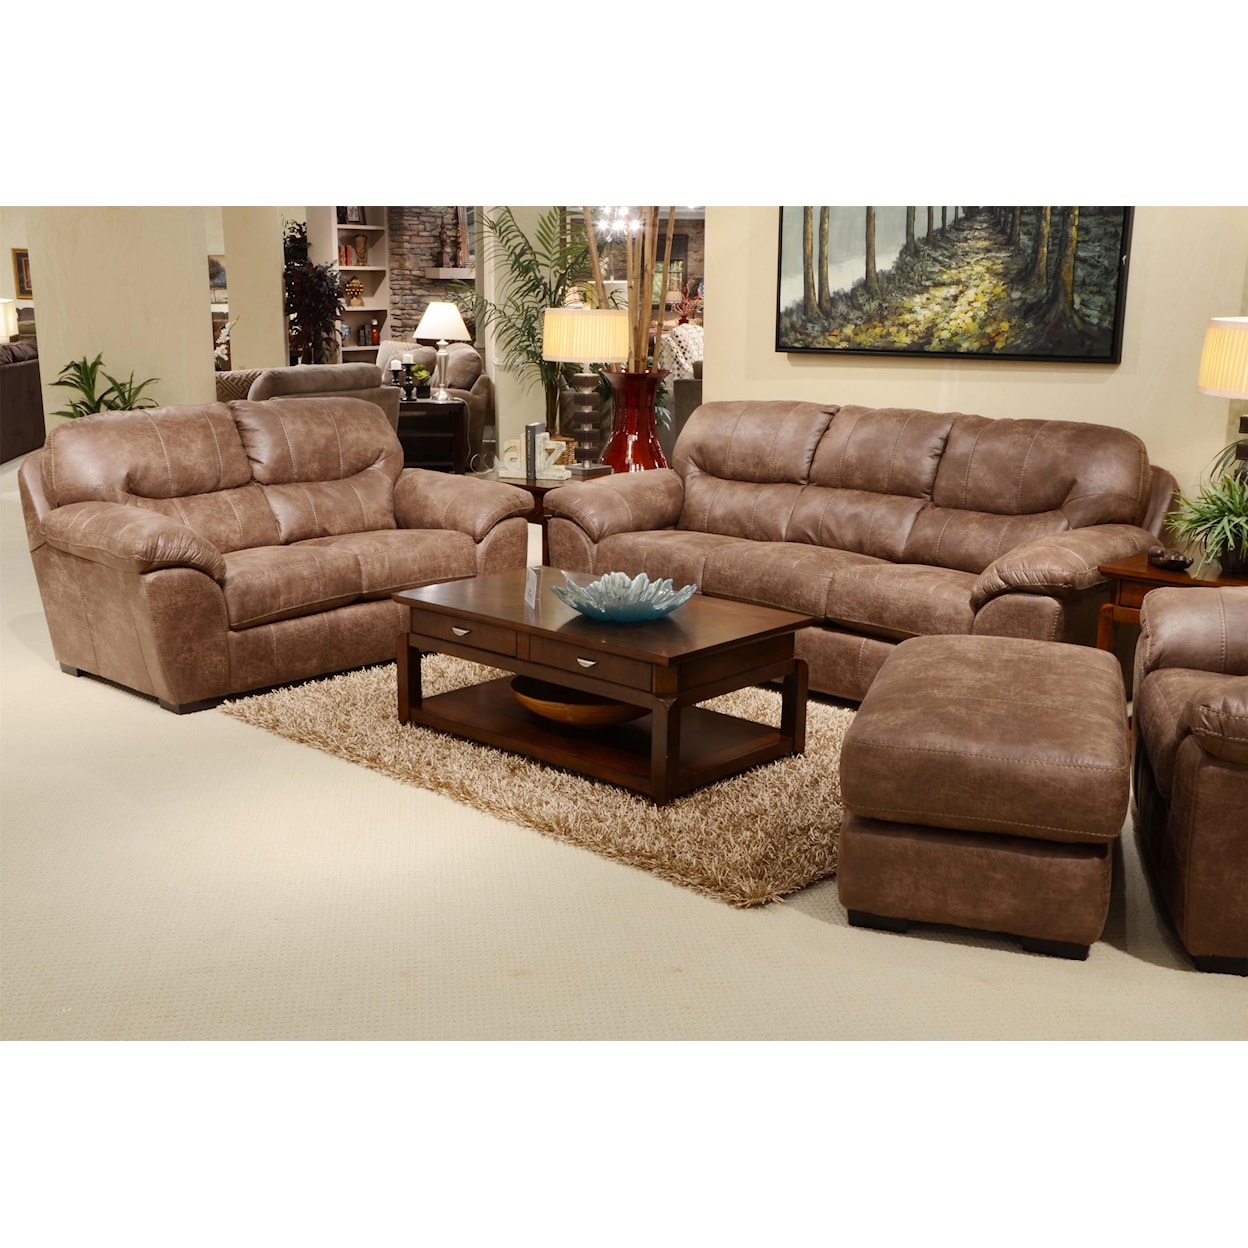 Jackson Furniture 4453 Grant Stationary Living Room Group